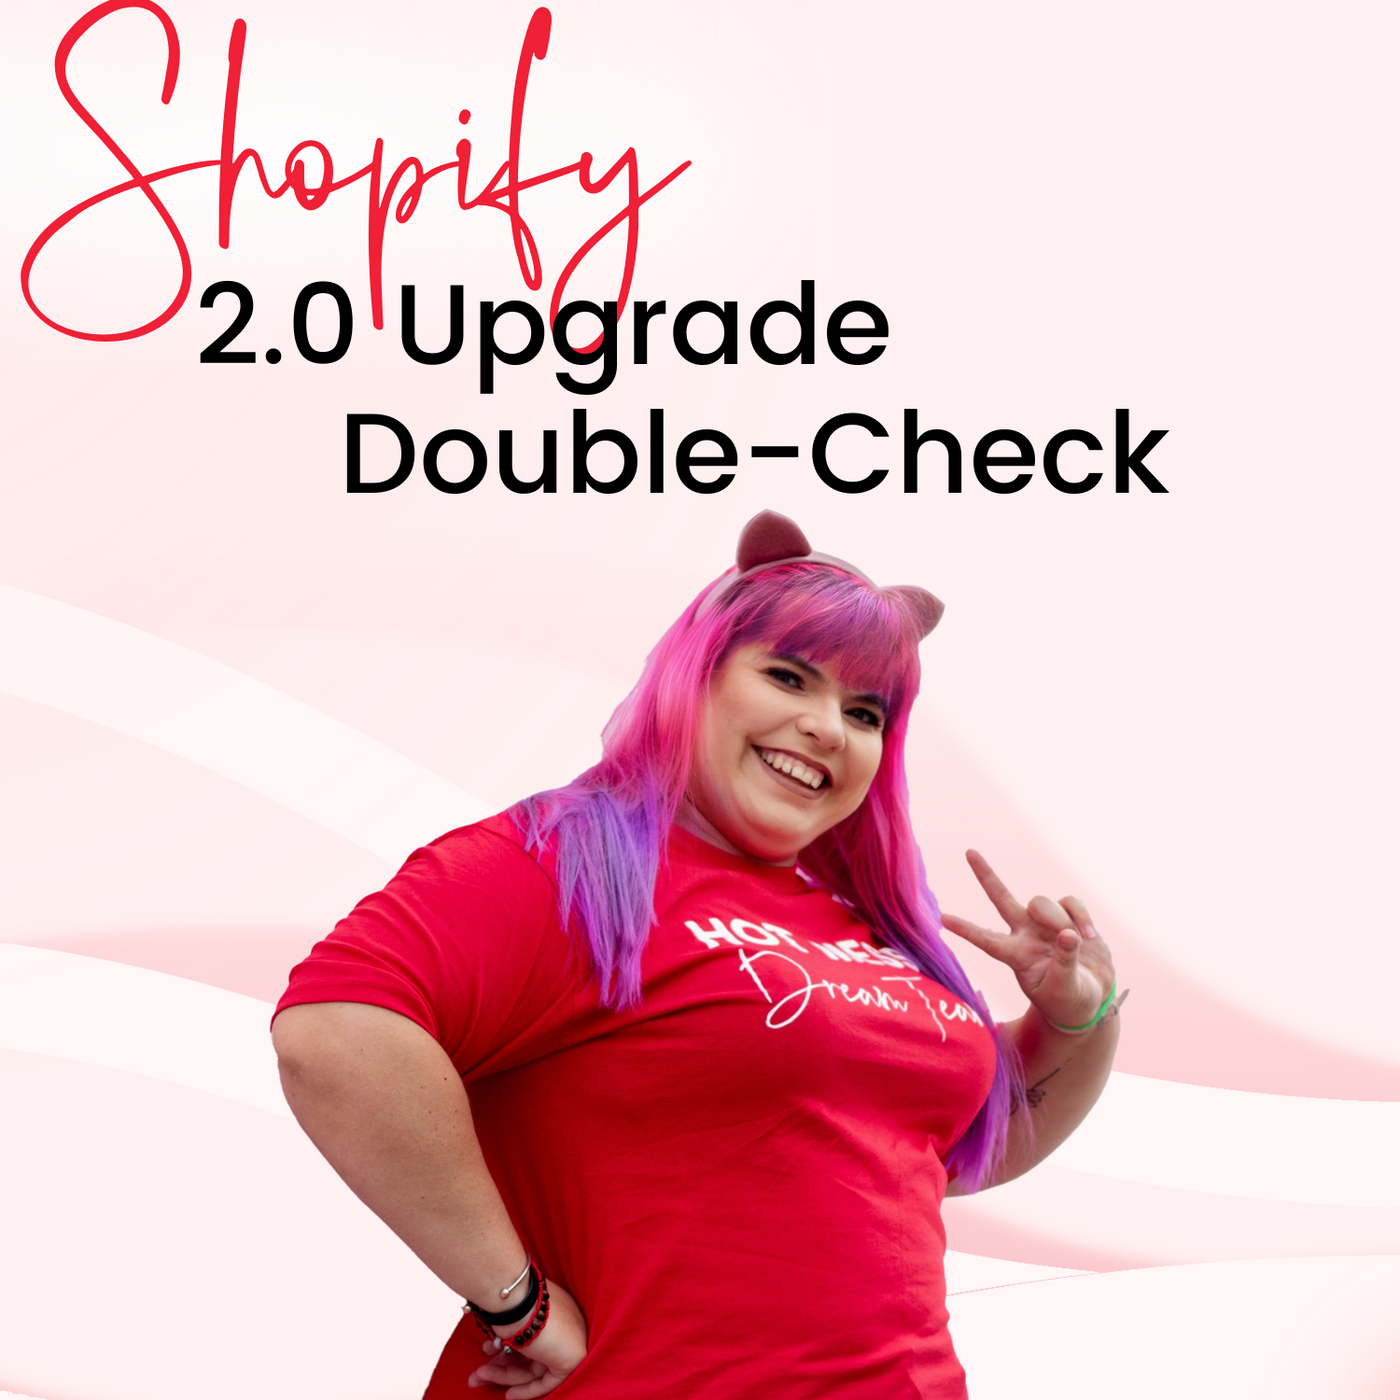 Shopify 2.0 Upgrade Double-Check